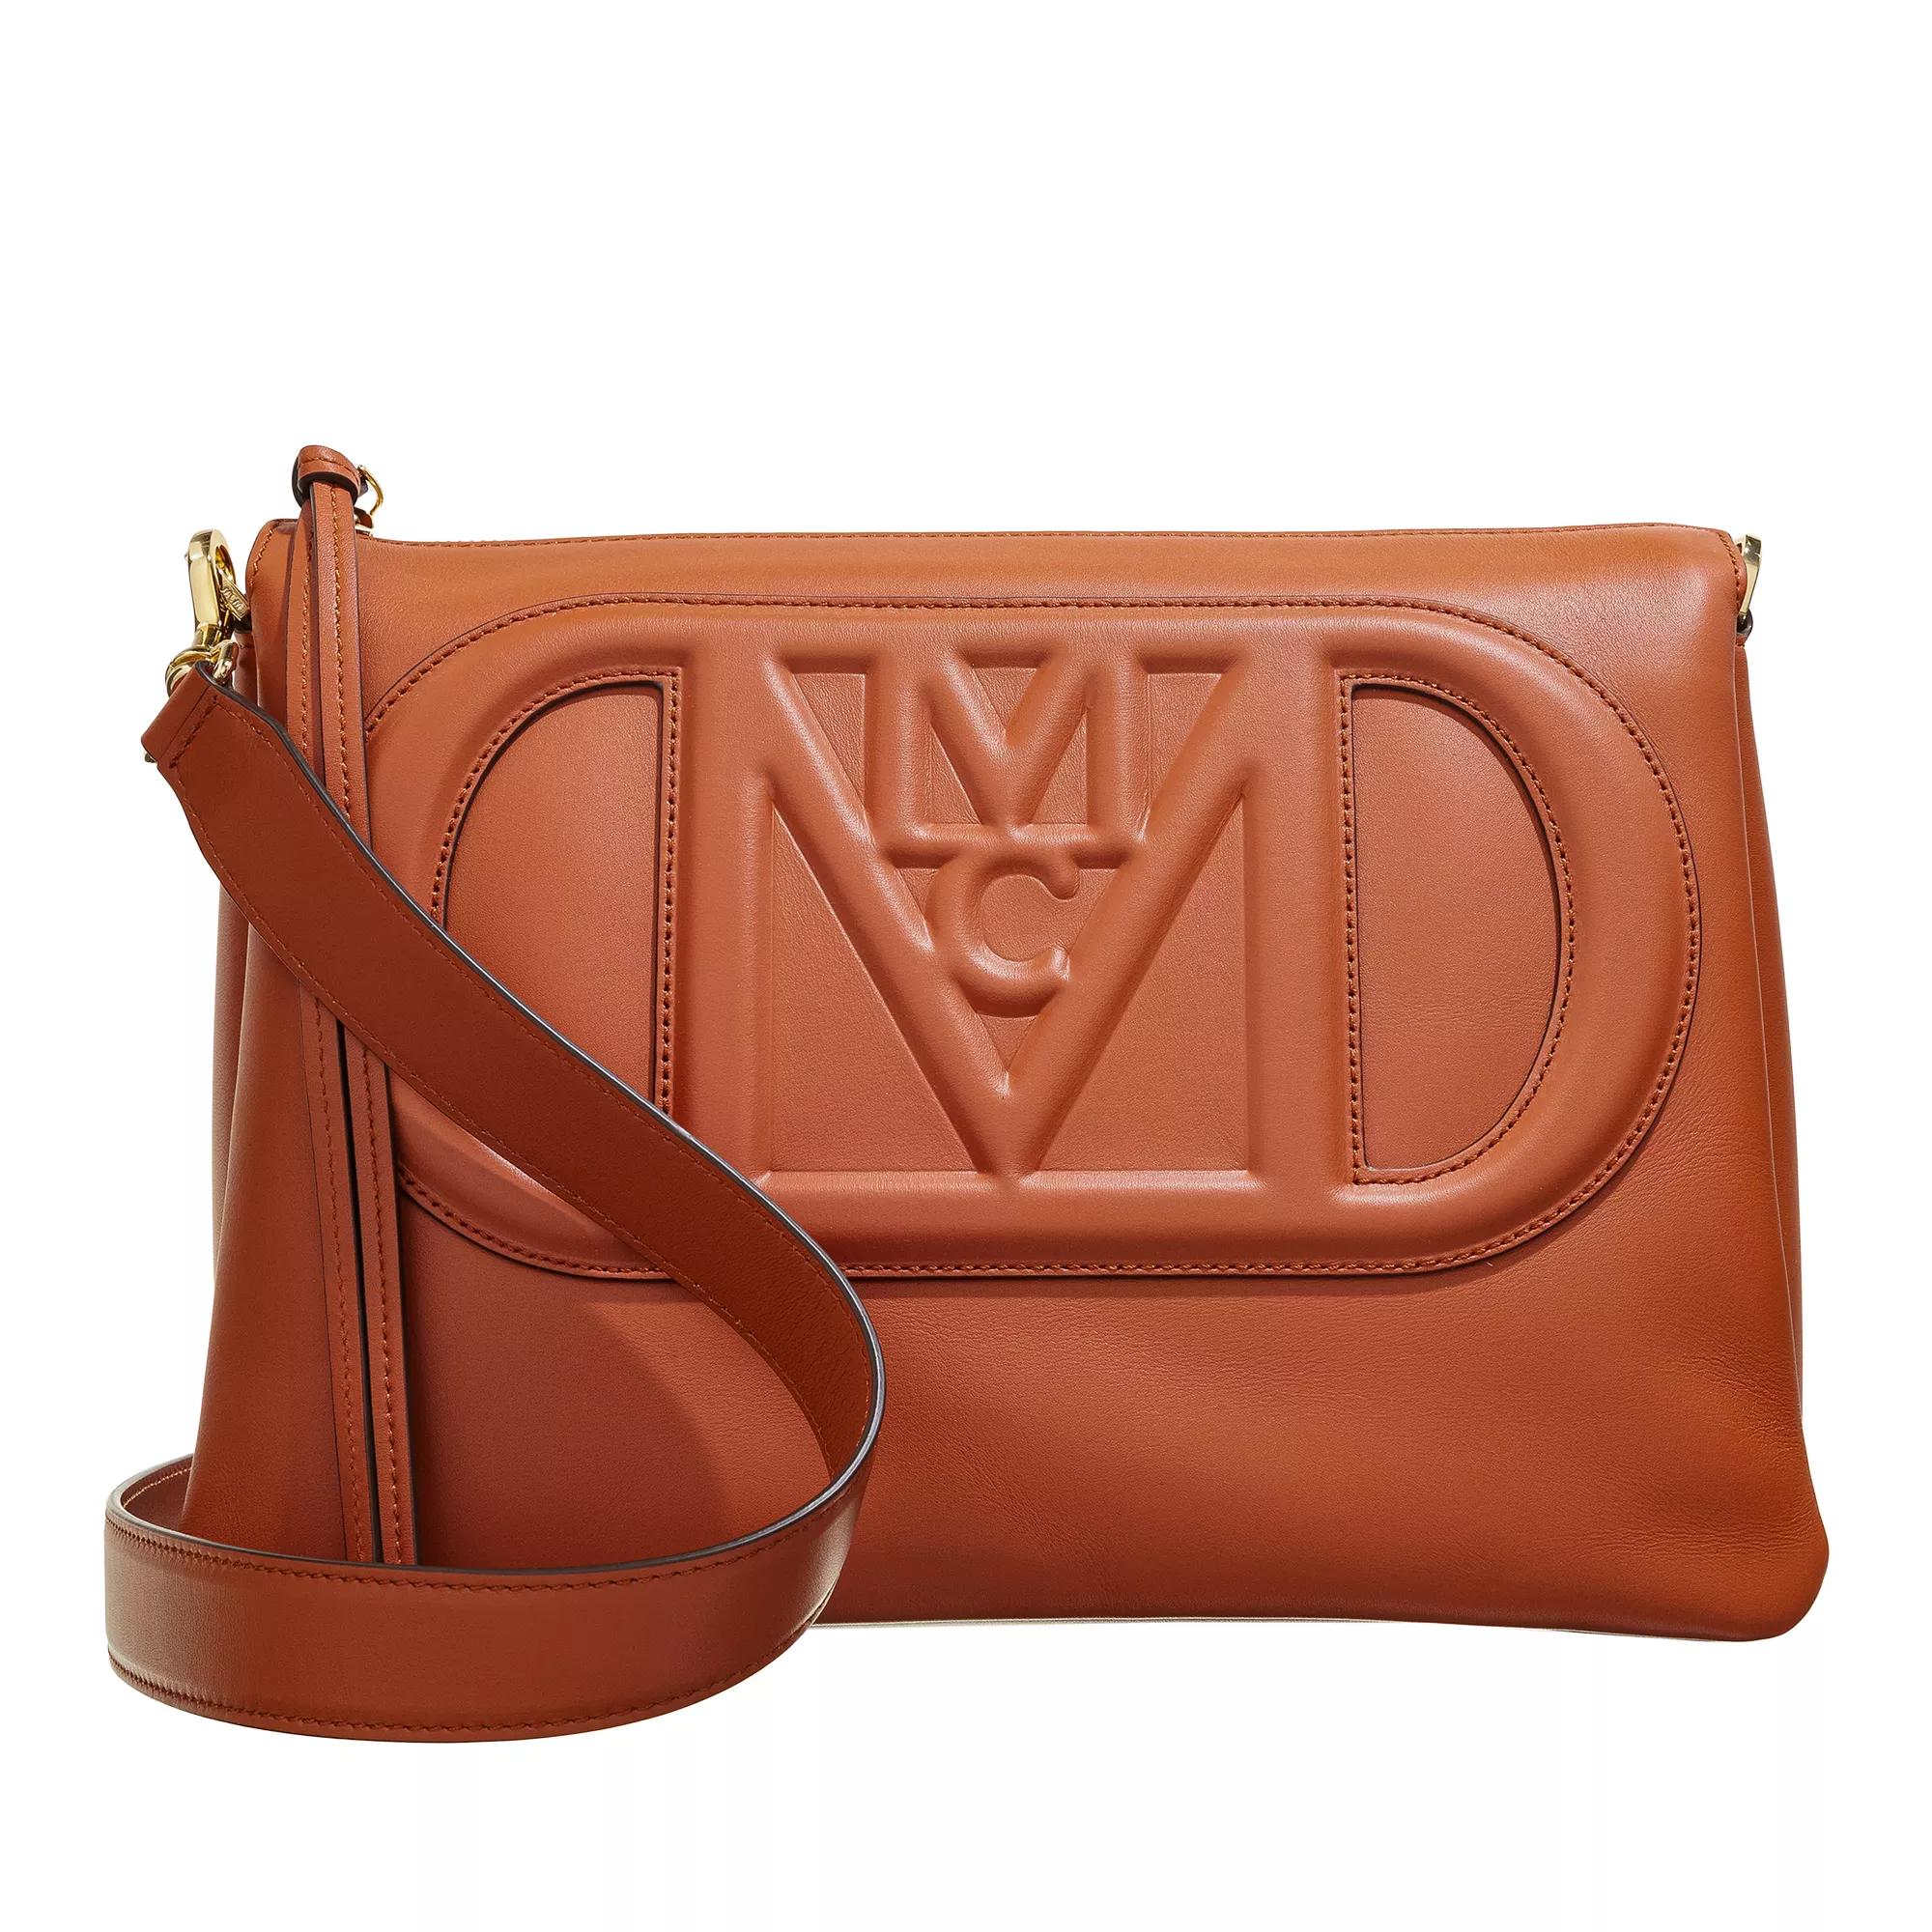 The Louis Vuitton lookalike handbag 👜